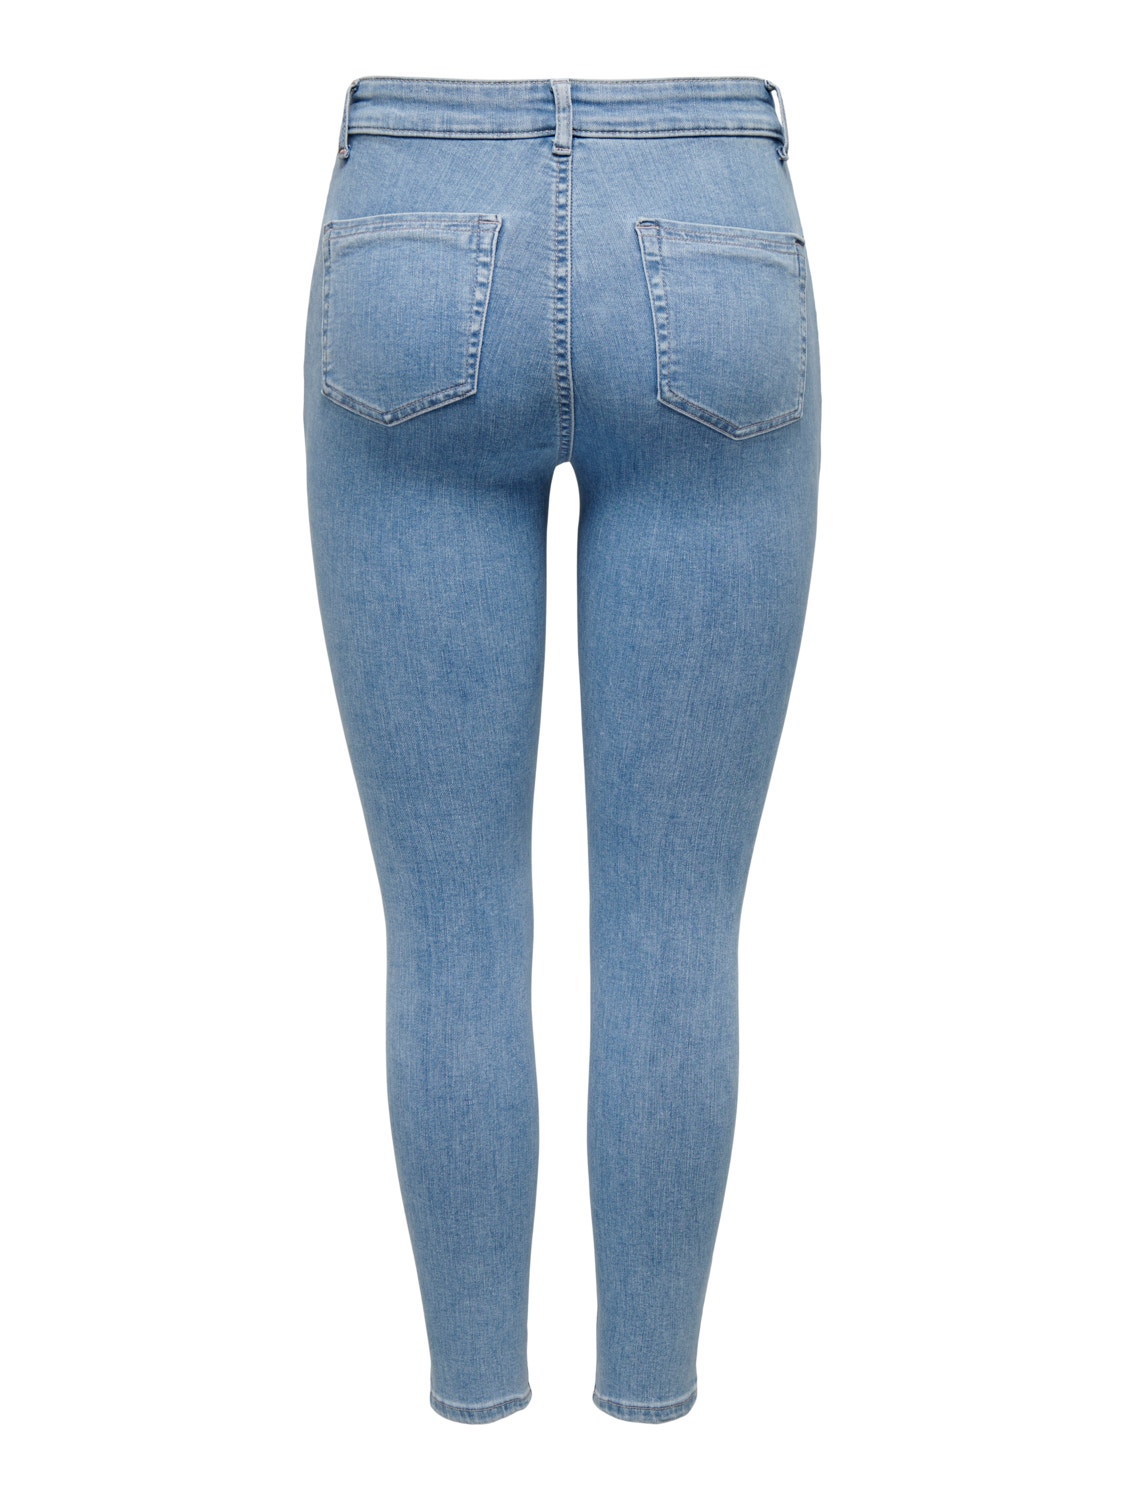 ONLY Skinny Fit High waist Jeans -Light Blue Denim - 15259336